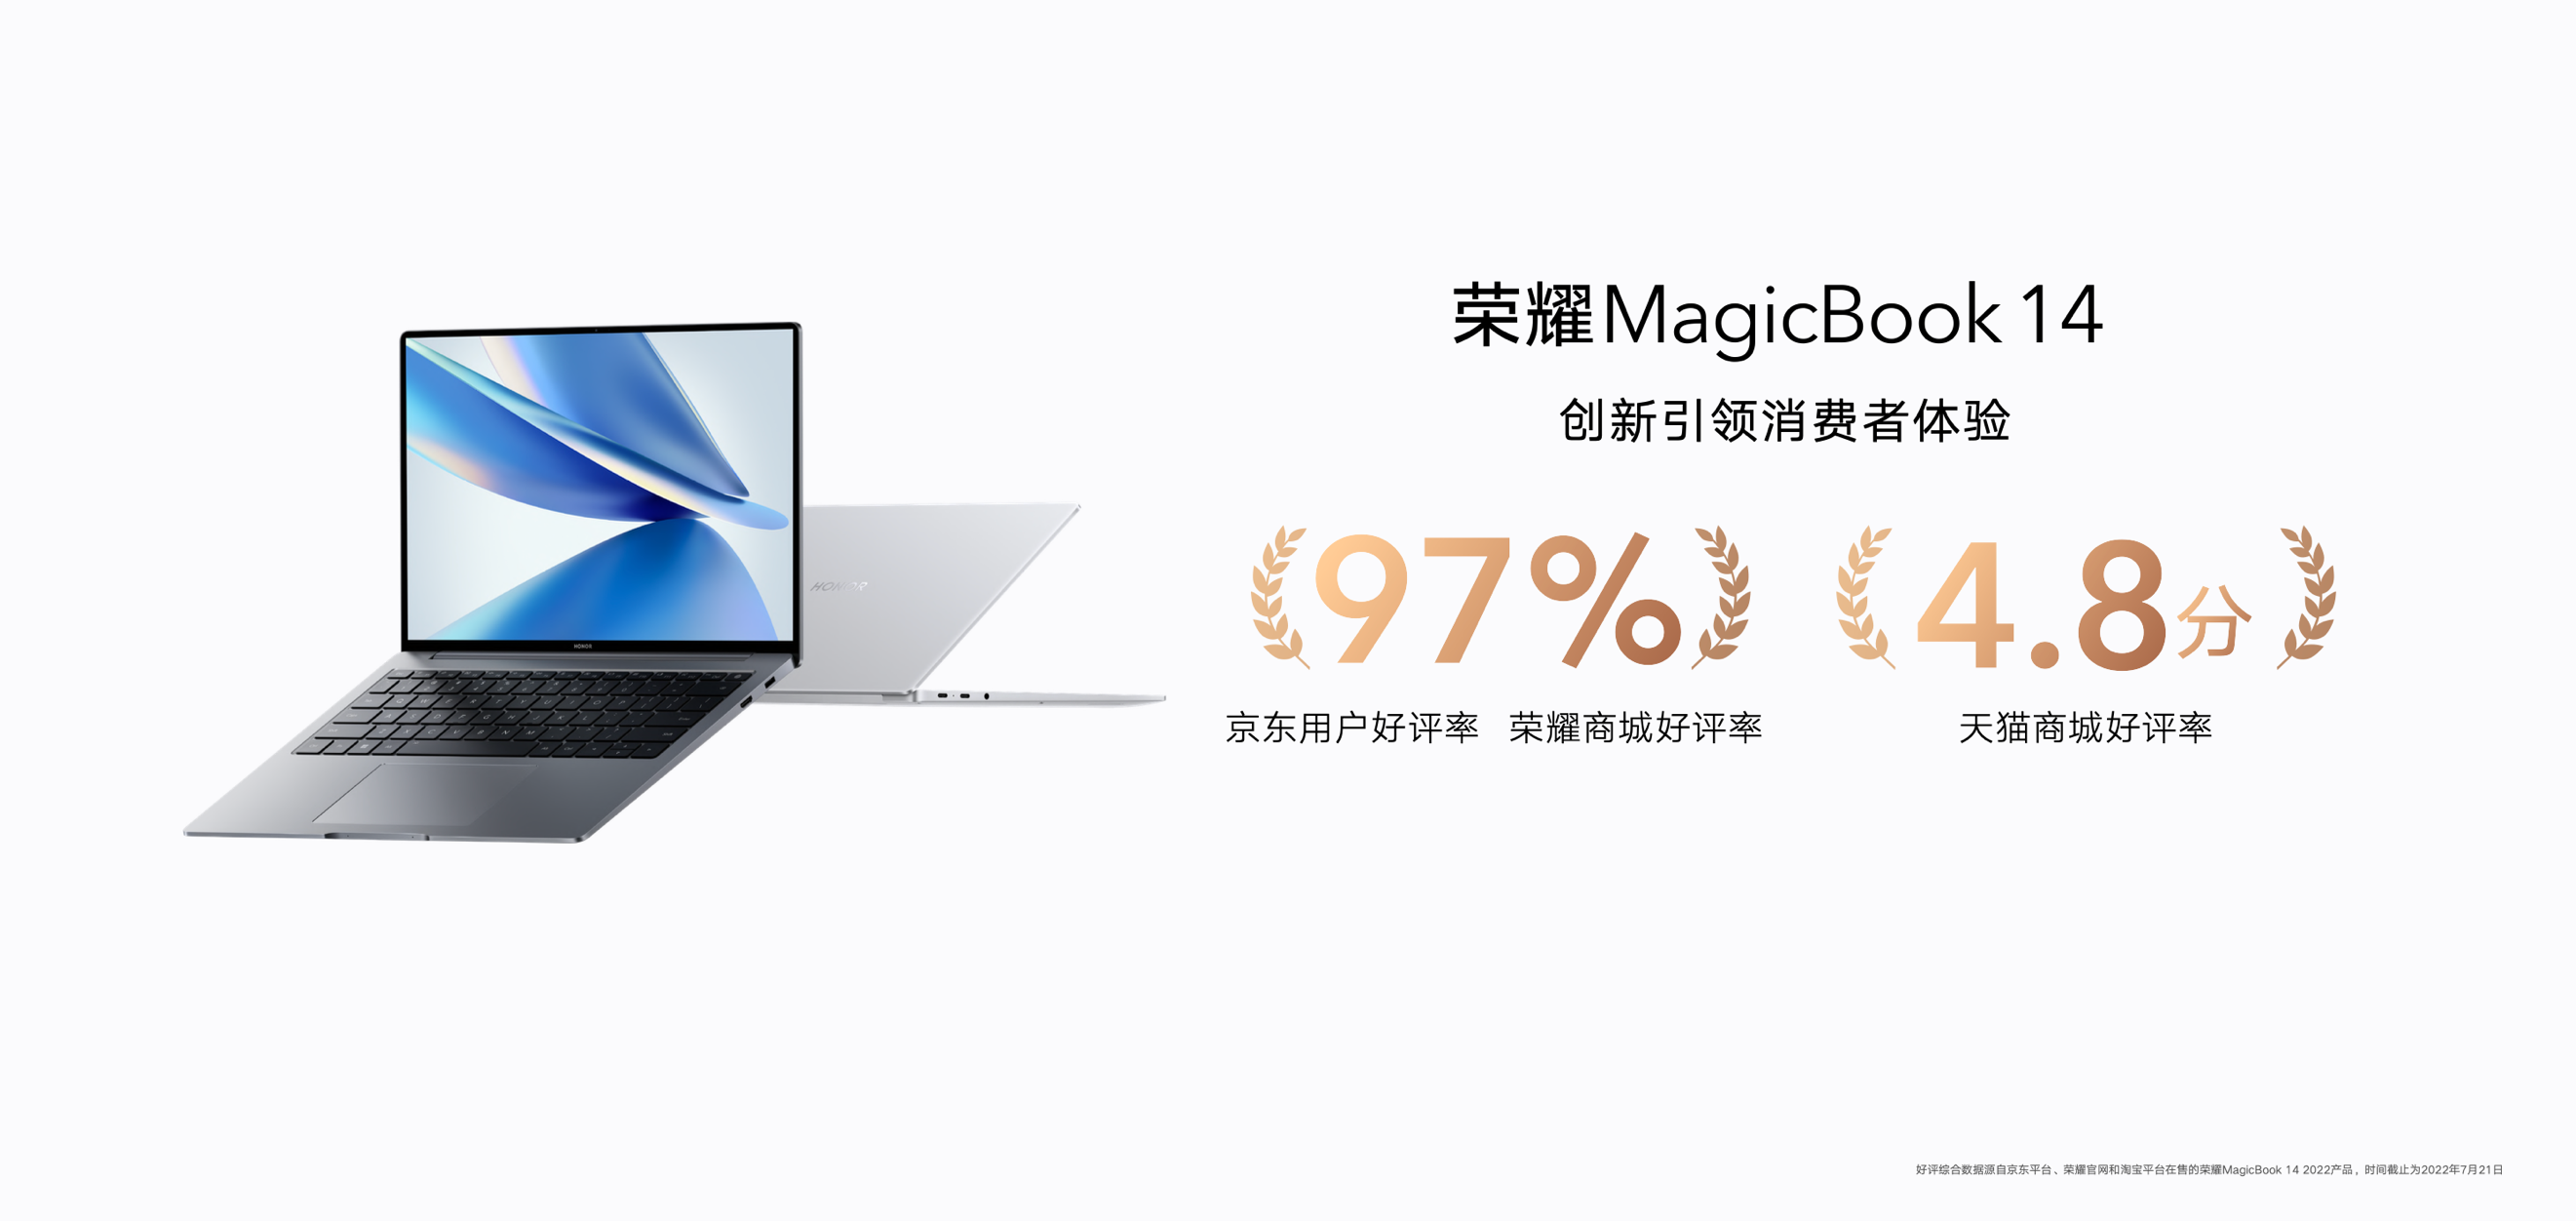 AMD平台首款搭载OS Turbo轻薄本，全新荣耀MagicBook 14 锐龙版正式发布